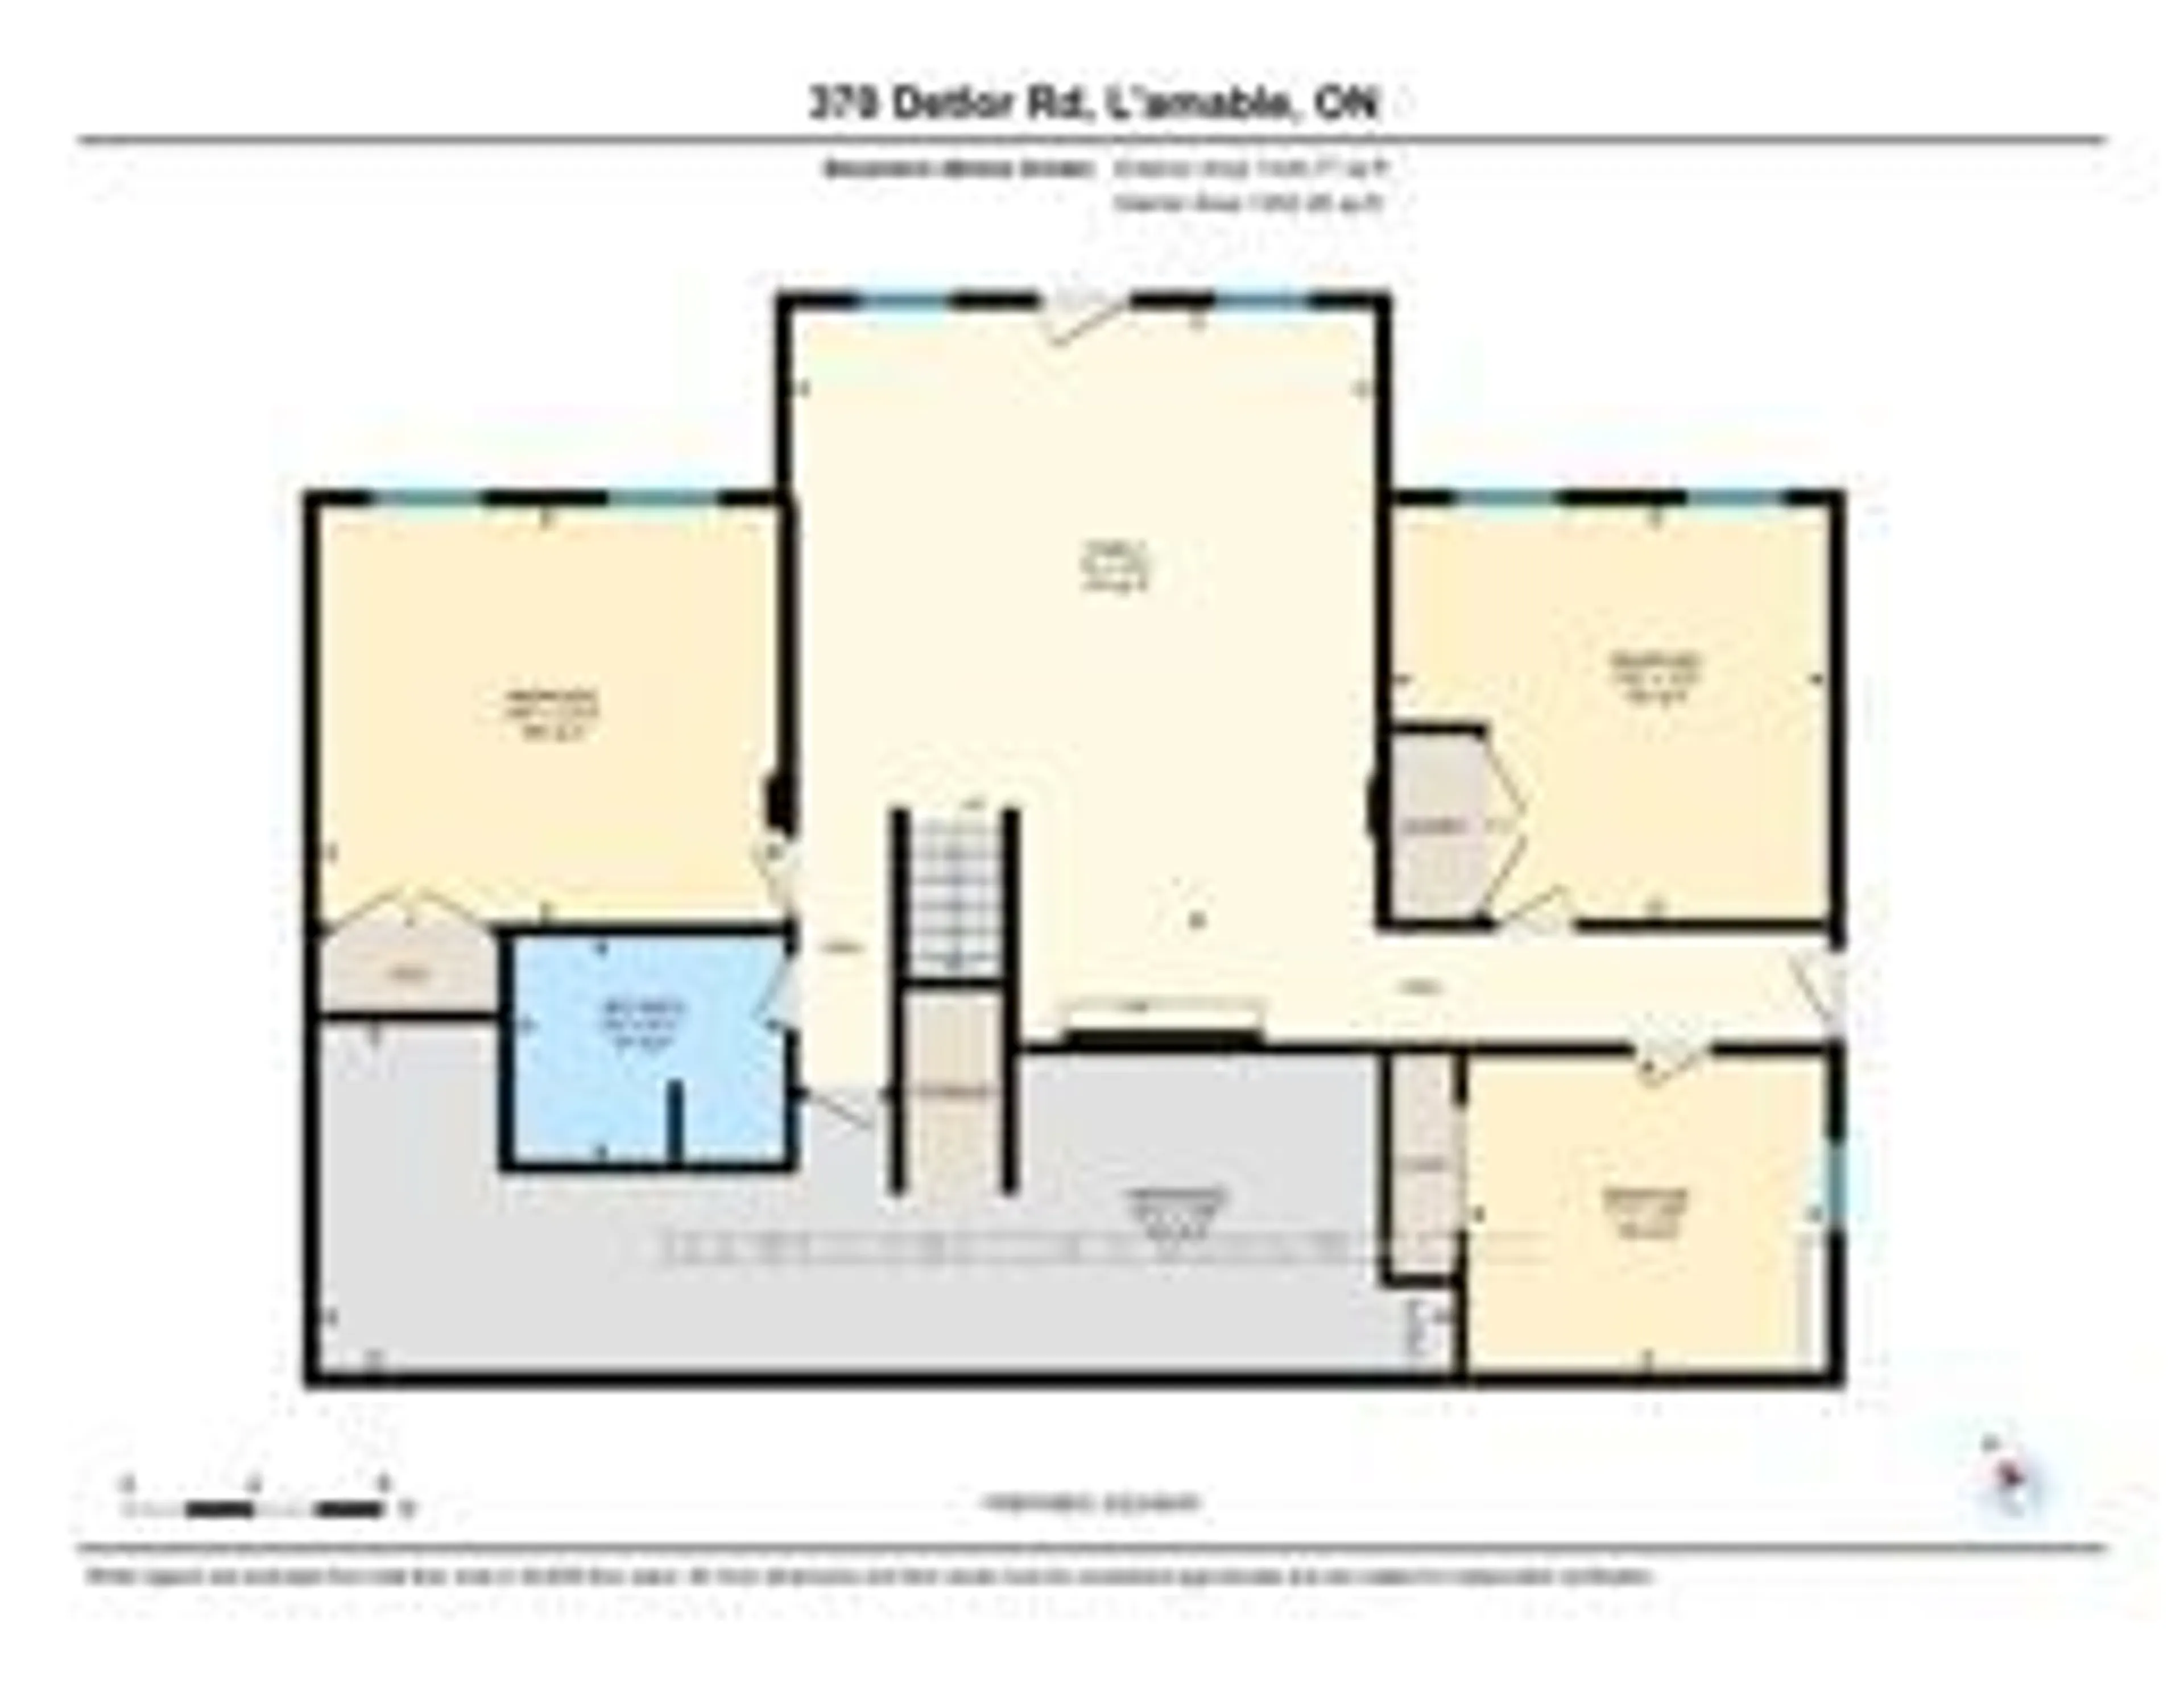 Floor plan for 370 Detlor Rd, Bancroft Ontario K0L 1C0